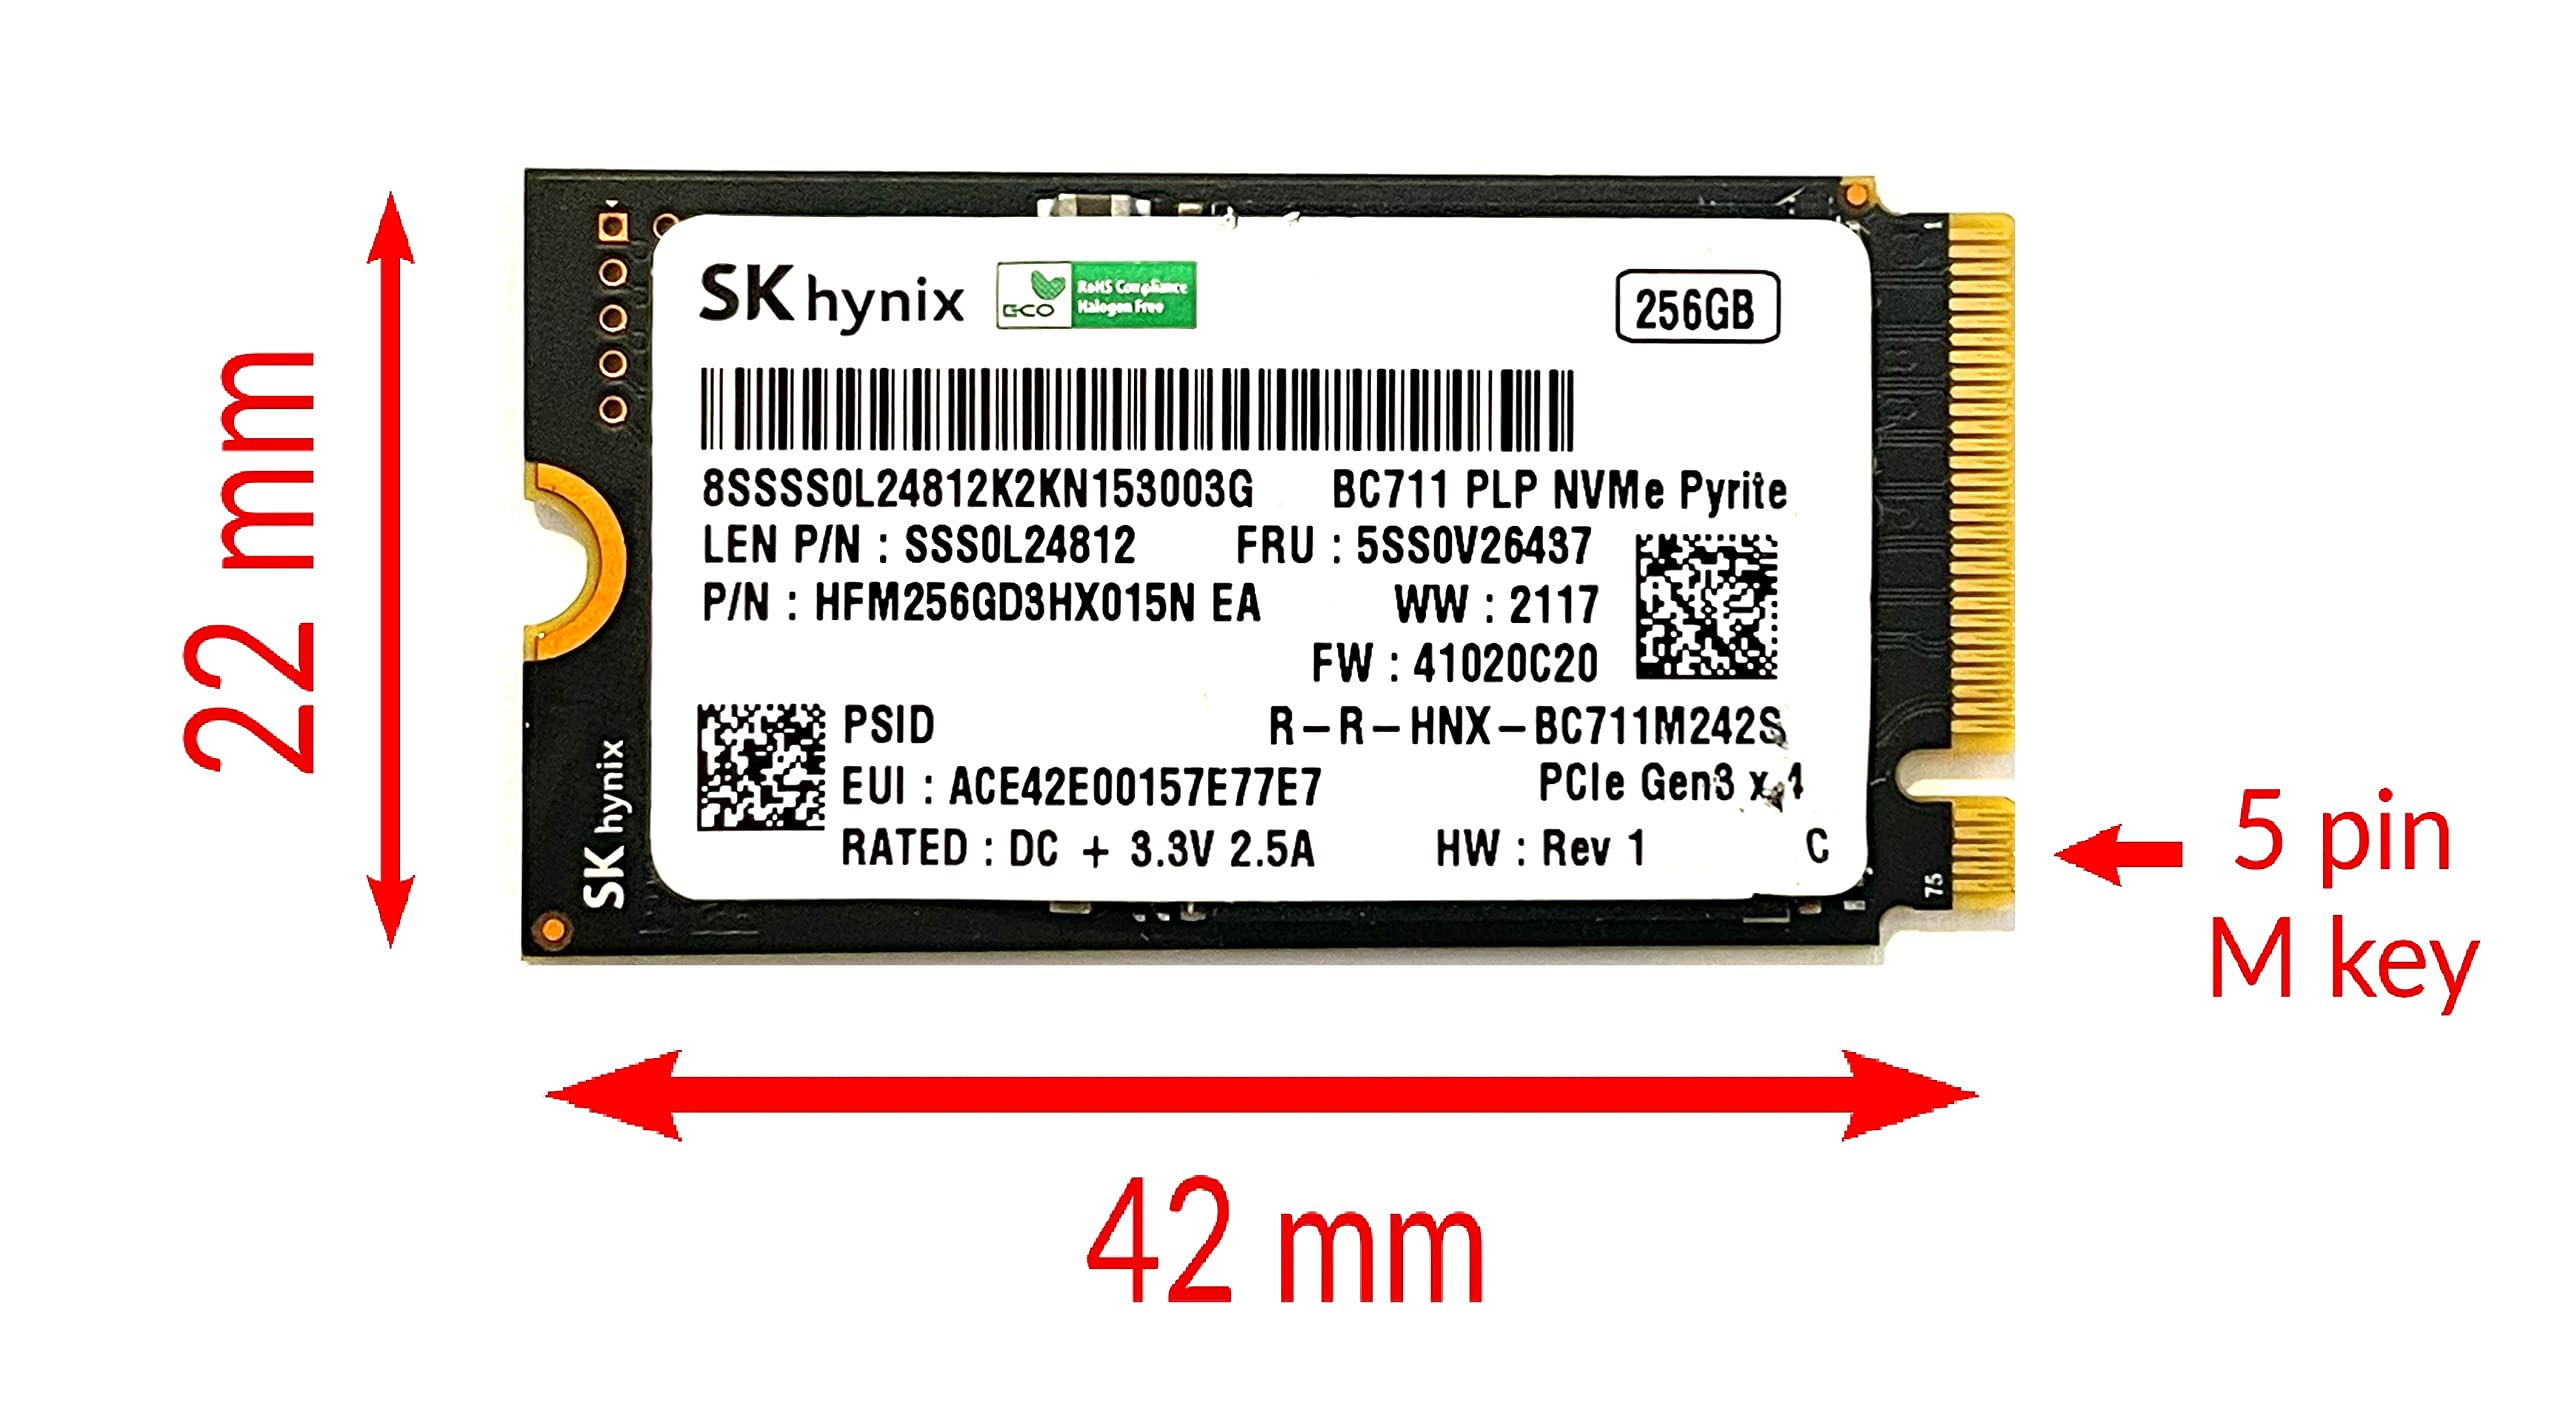 OEM SK Hynix 256GB M.2 PCI-e NVME Internal Solid State Drive 42mm 2242 Form Factor M Key